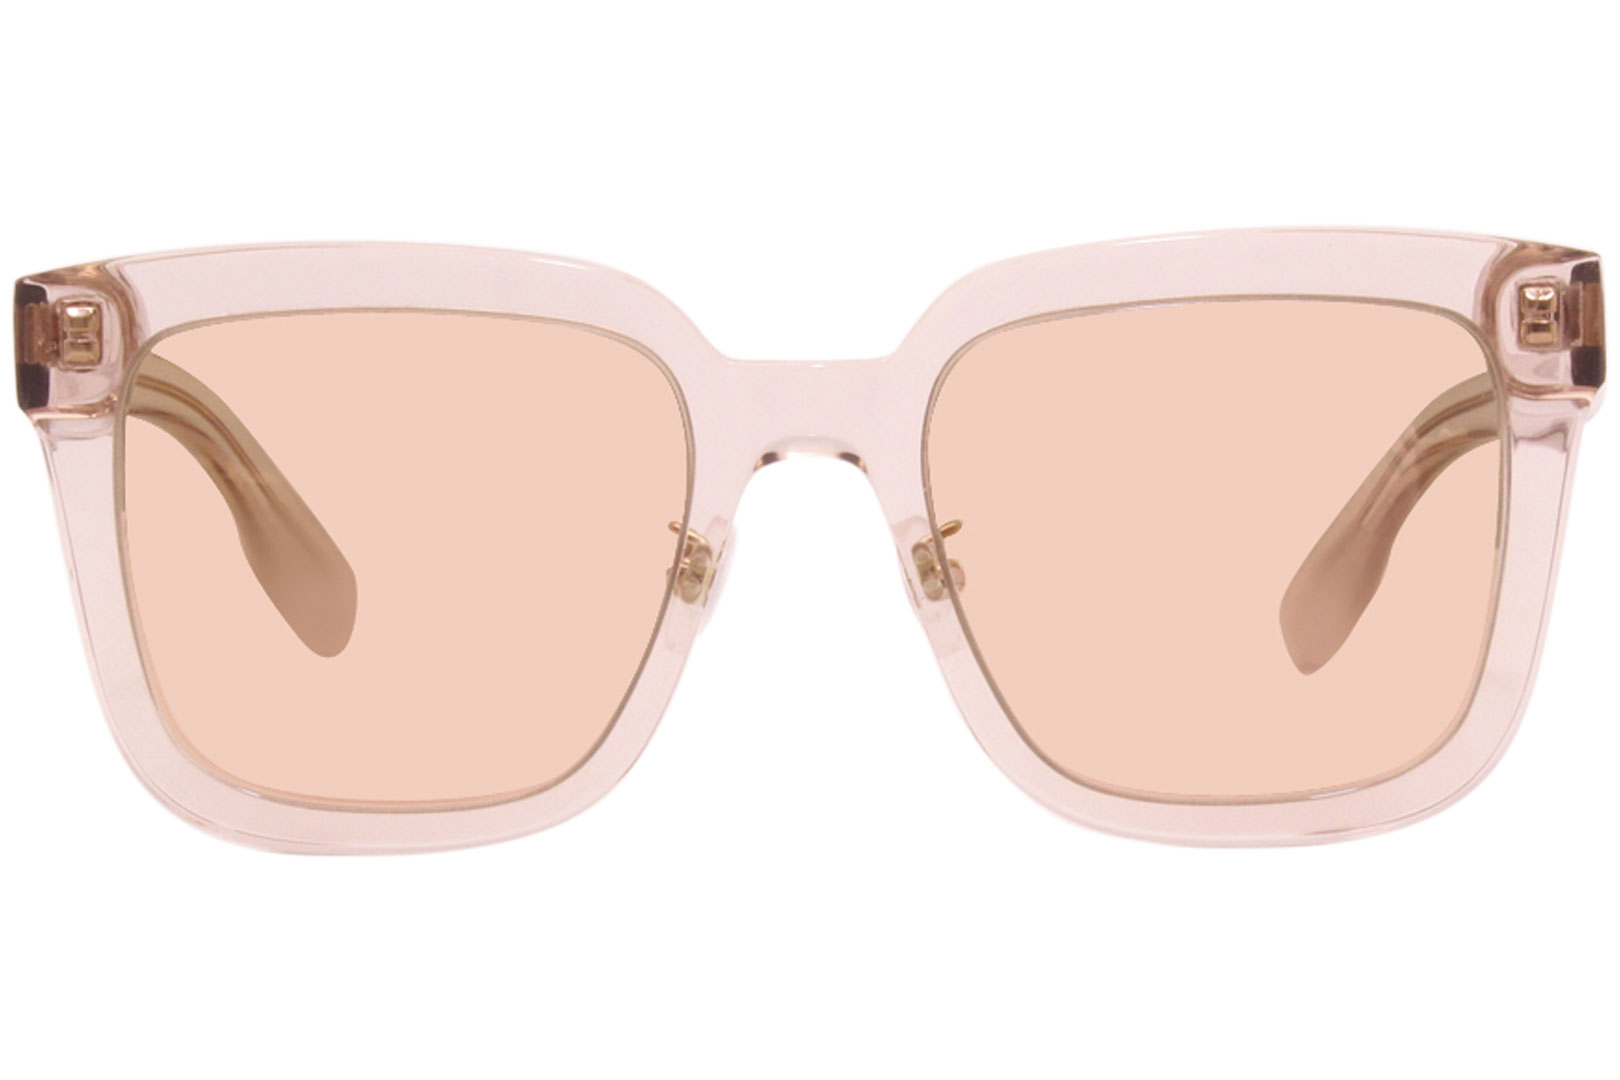 Kenzo Sunglasses Women's KZ40087F 72G Pink/Brown Mirror 52-20-145mm